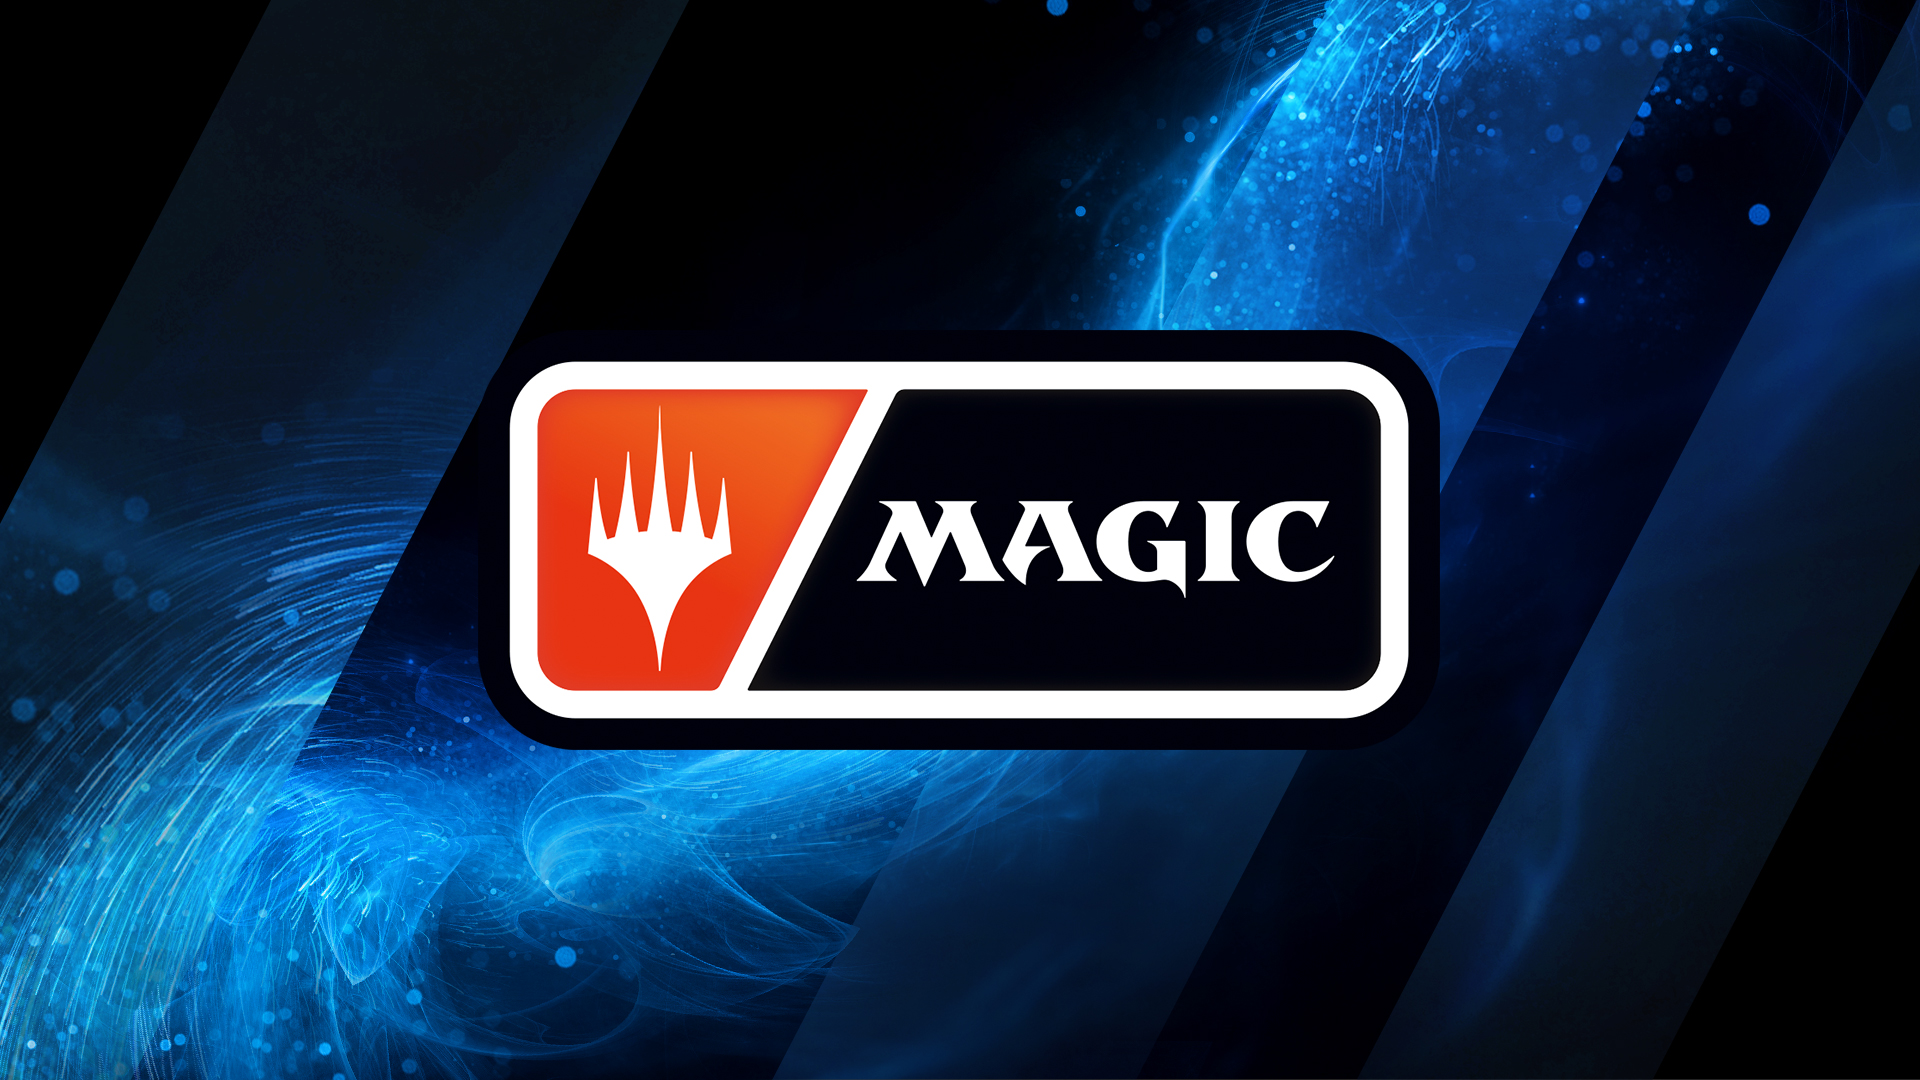 Magic The Gathering’s Pro Tour circuit returns!